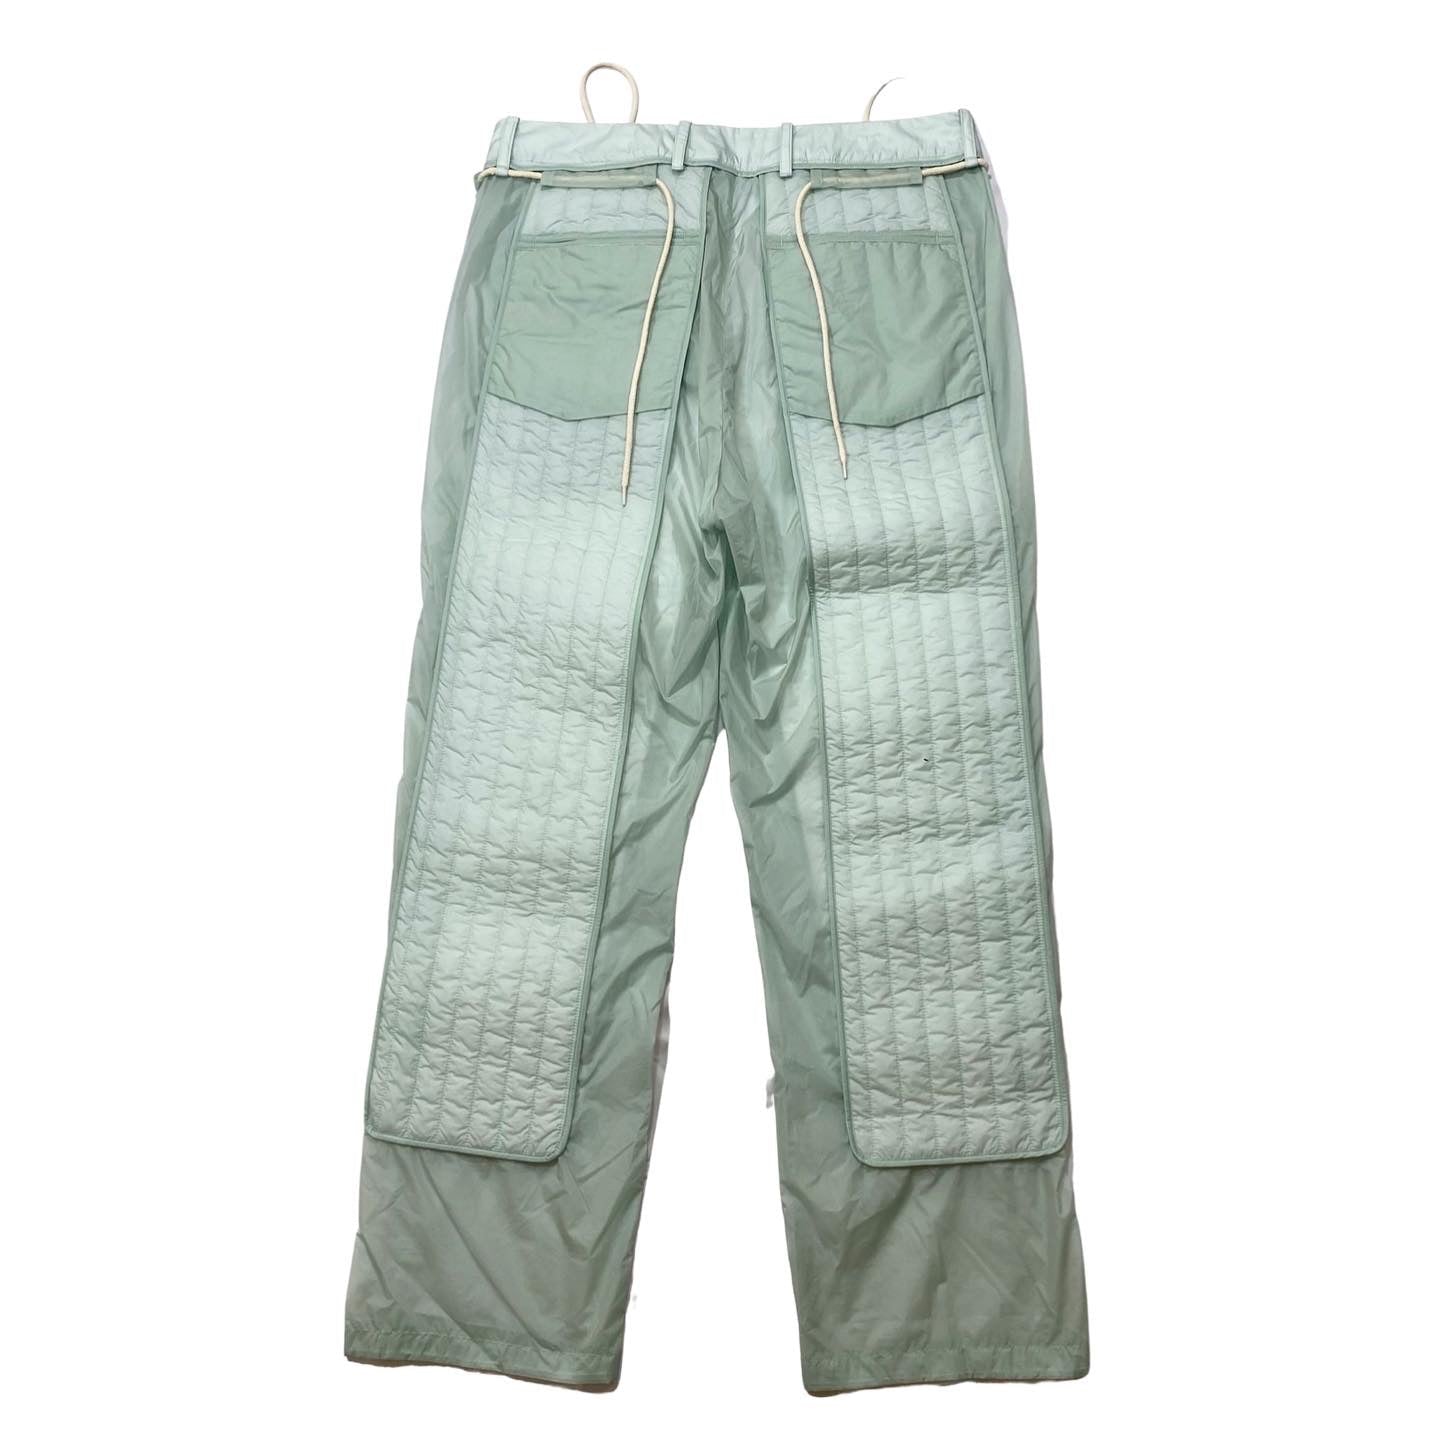 Summer Spring Formal Cotton Ice Blue Men's Pants Wedding Slim Fit Waist 30  at Amazon Men's Clothing store